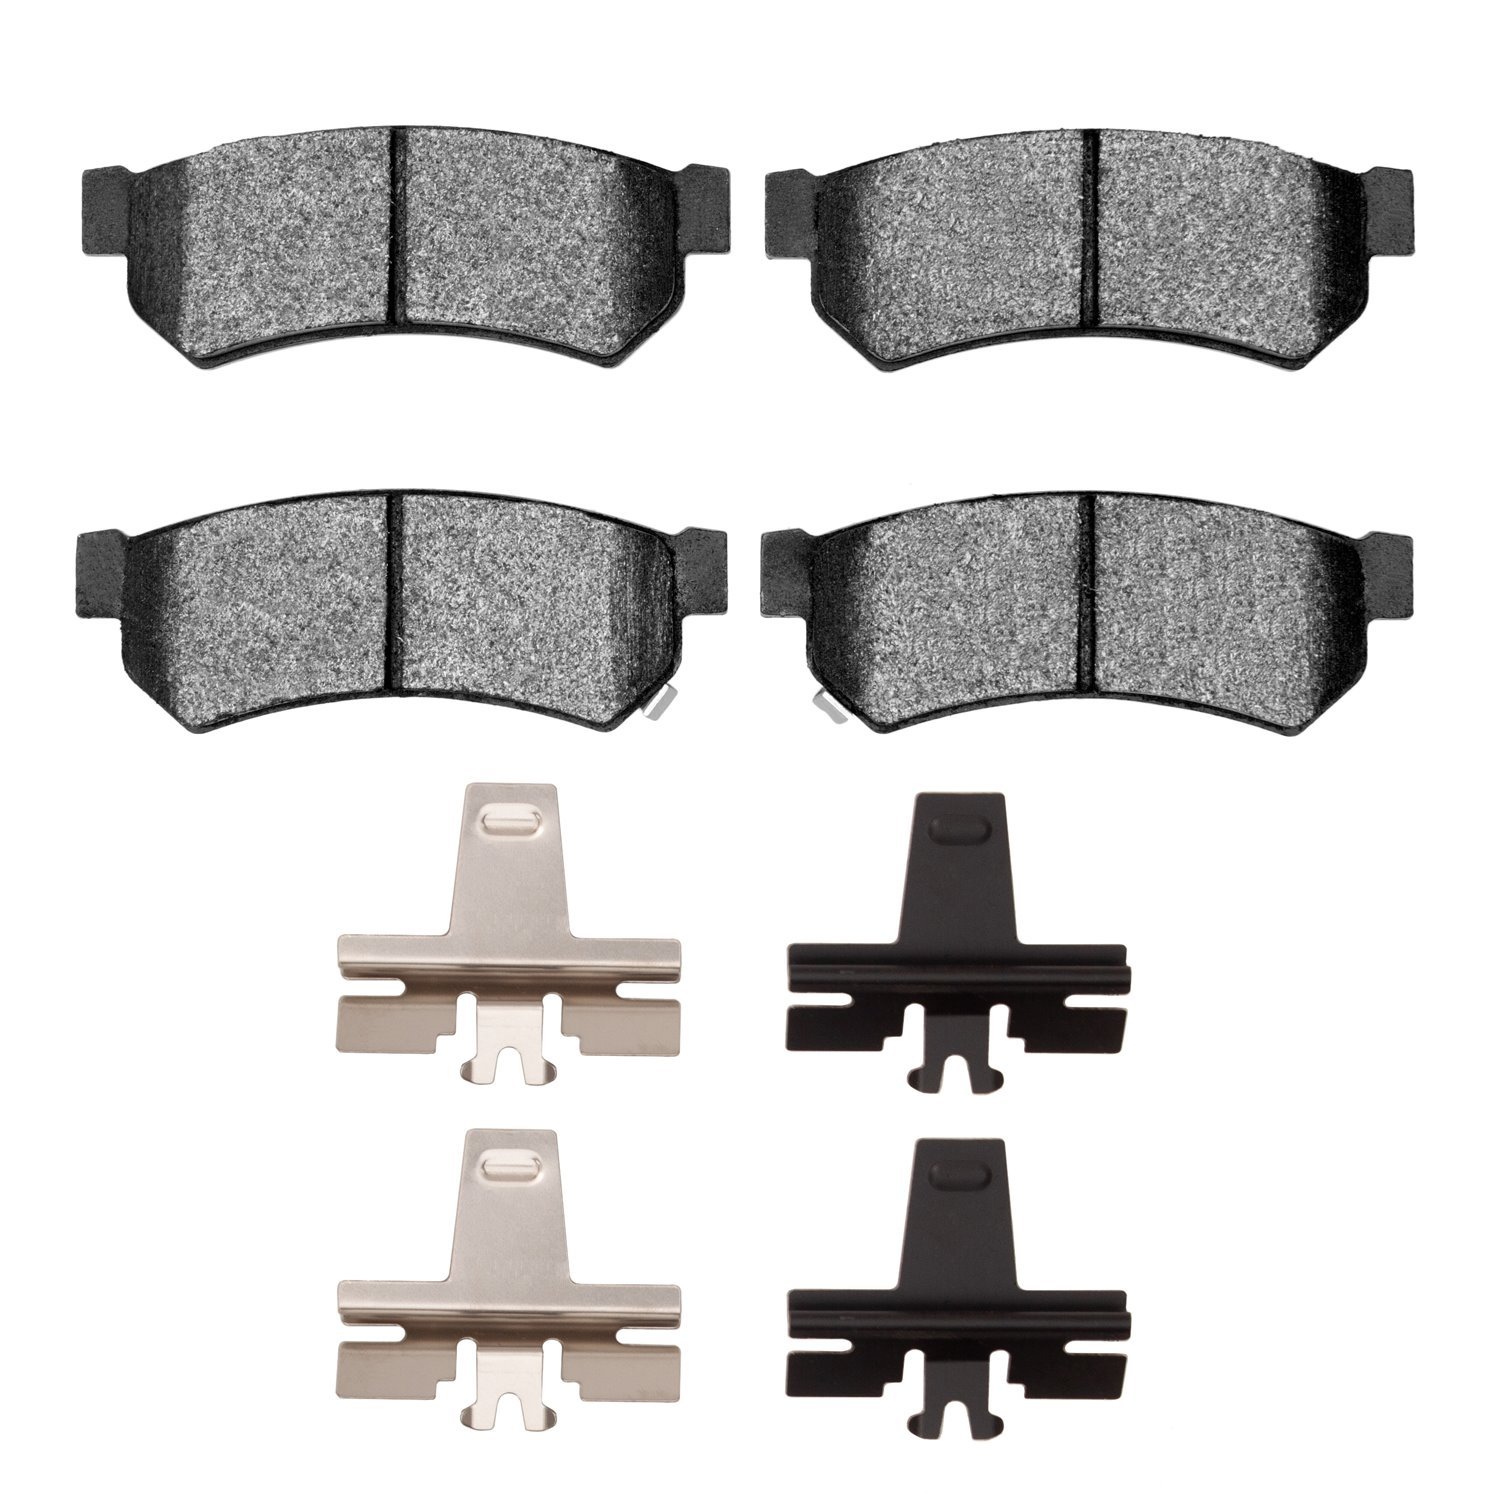 Ceramic Brake Pads & Hardware Kit, 2007-2016 Fits Multiple Makes/Models, Position: Rear